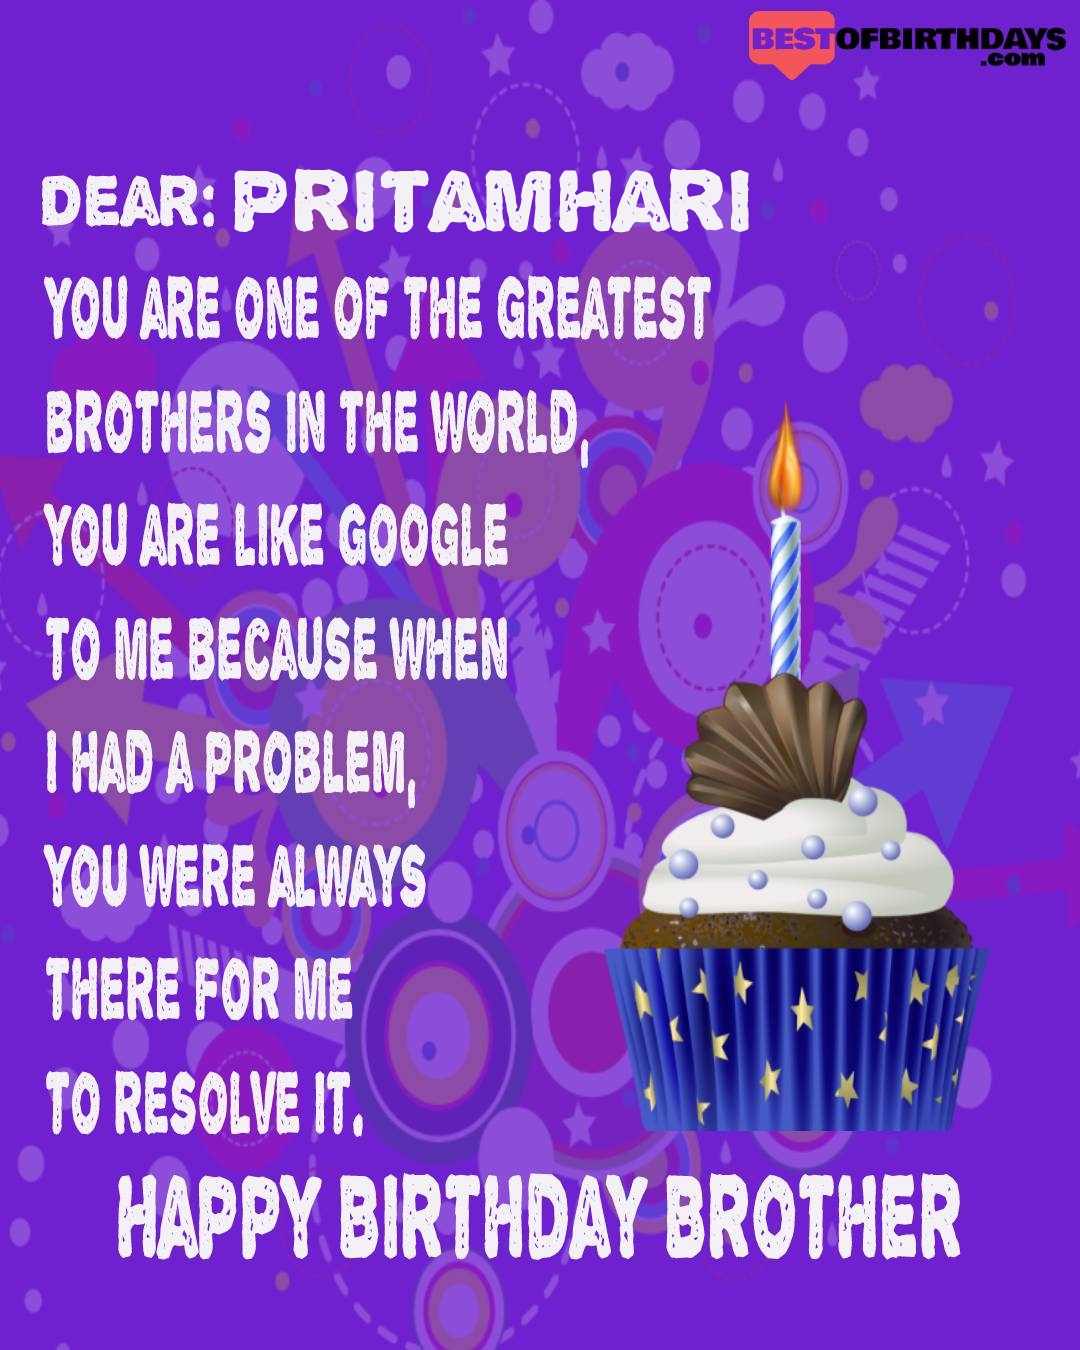 Happy birthday pritamhari bhai brother bro